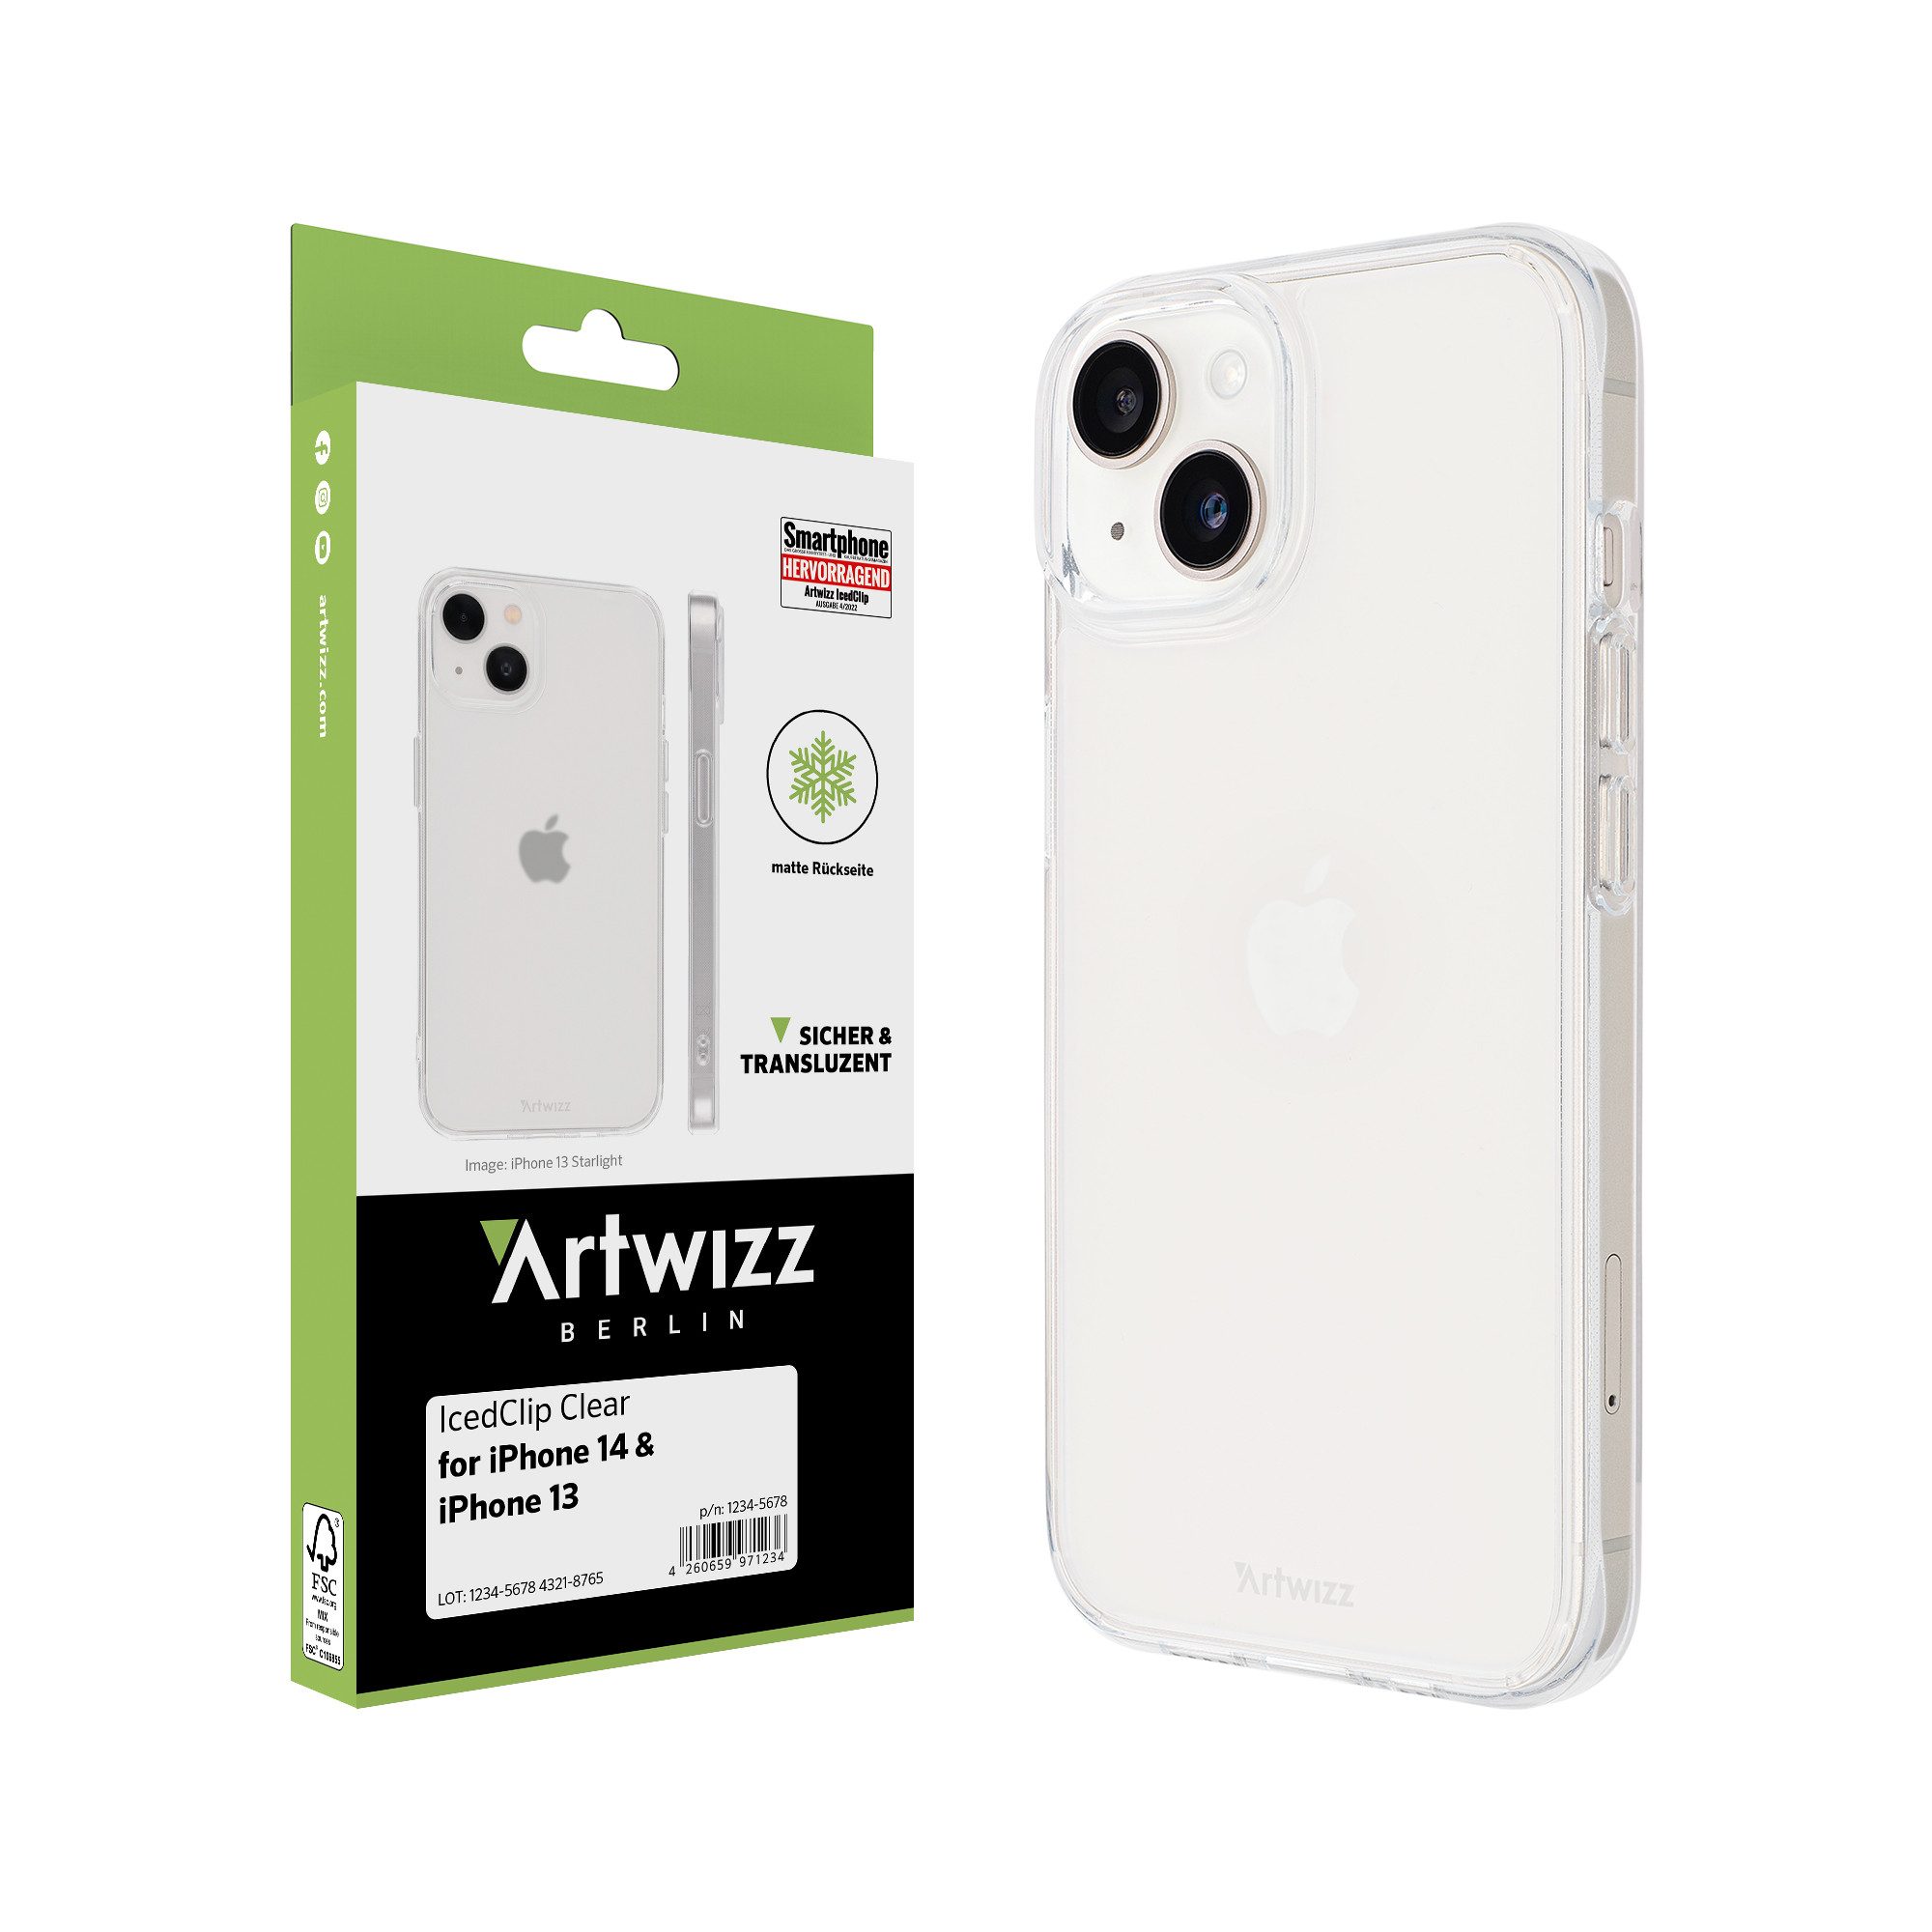 Artwizz Backcover IcedClip, Matte Schutzhülle mit transluzenter Rückseite, Transluzent, iPhone 14, iPhone 13